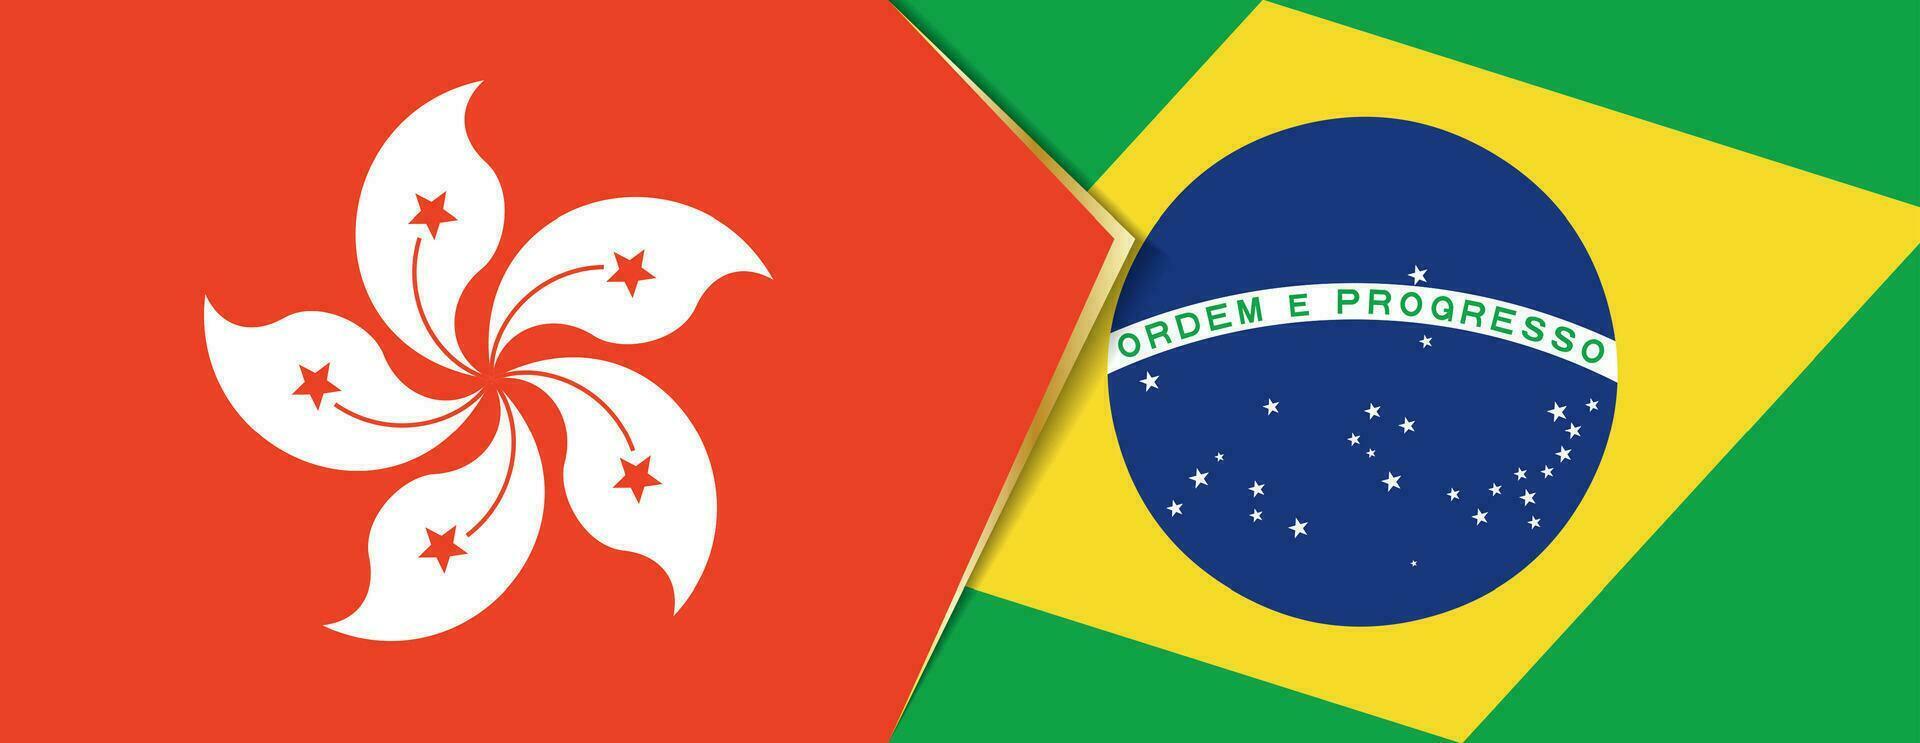 hong kong y Brasil banderas, dos vector banderas